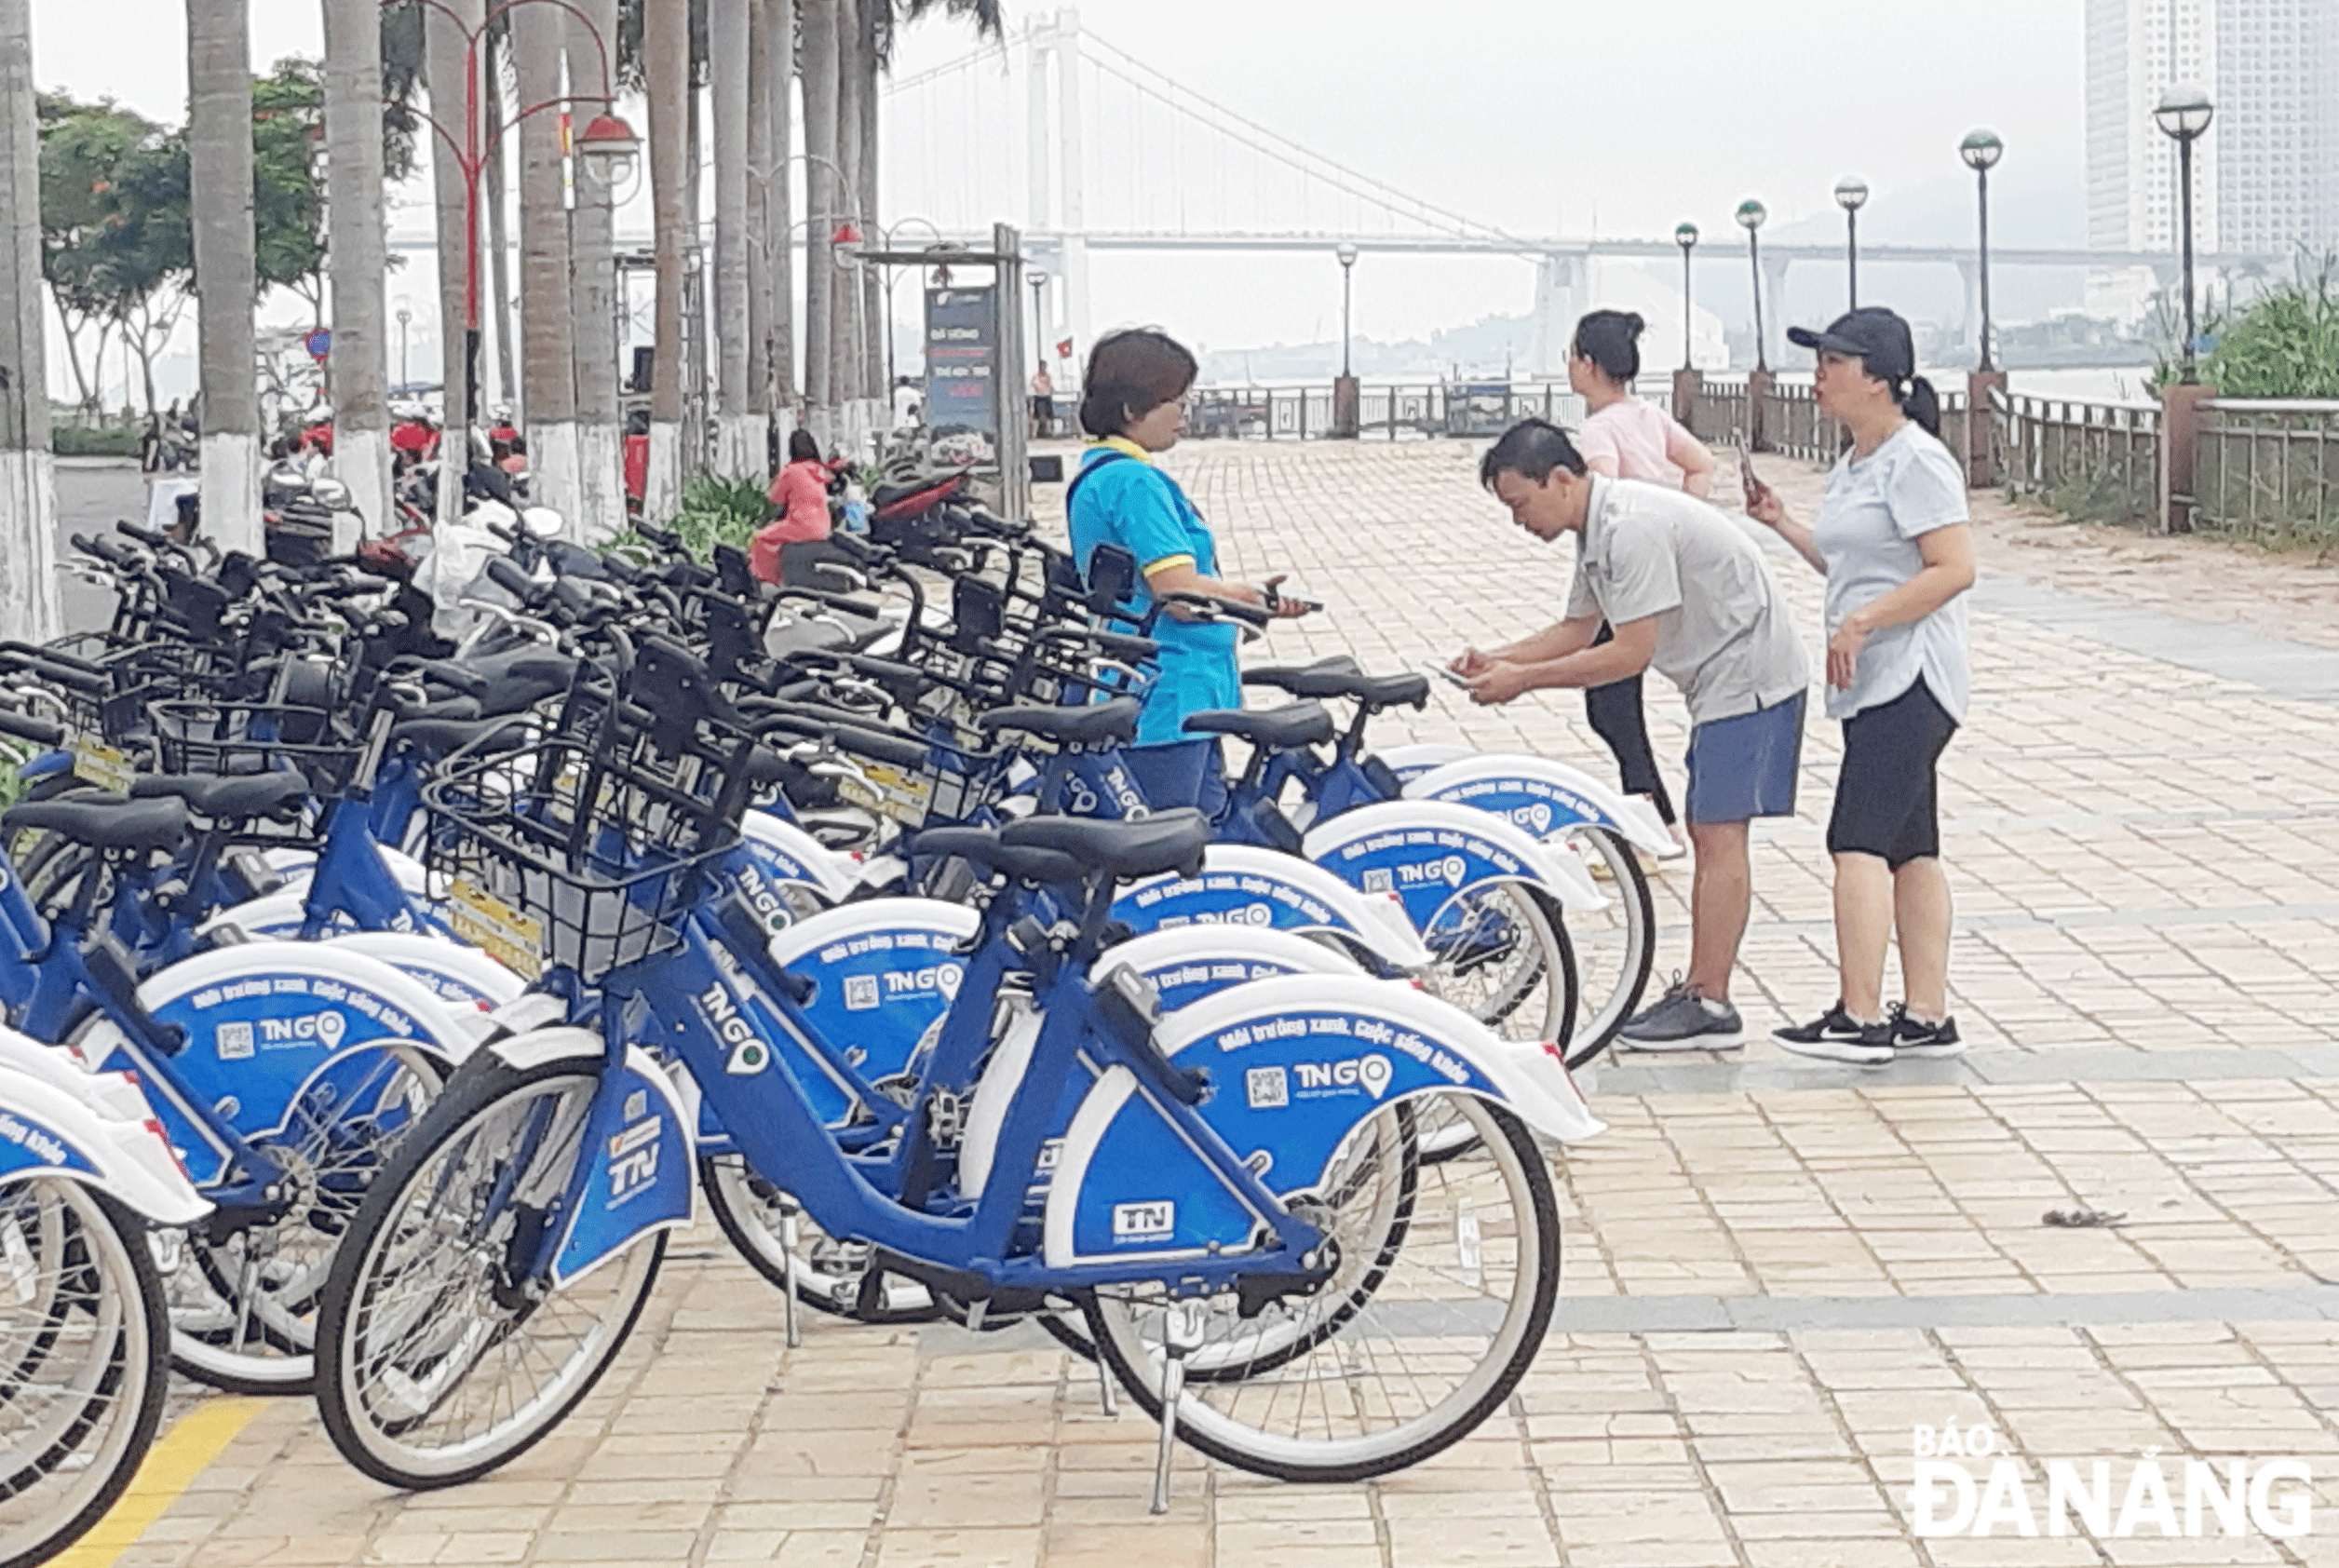 People are seen using public bike rental service on Nhu Nguyet Street, Hai Chau District. Photo: THANH LAN